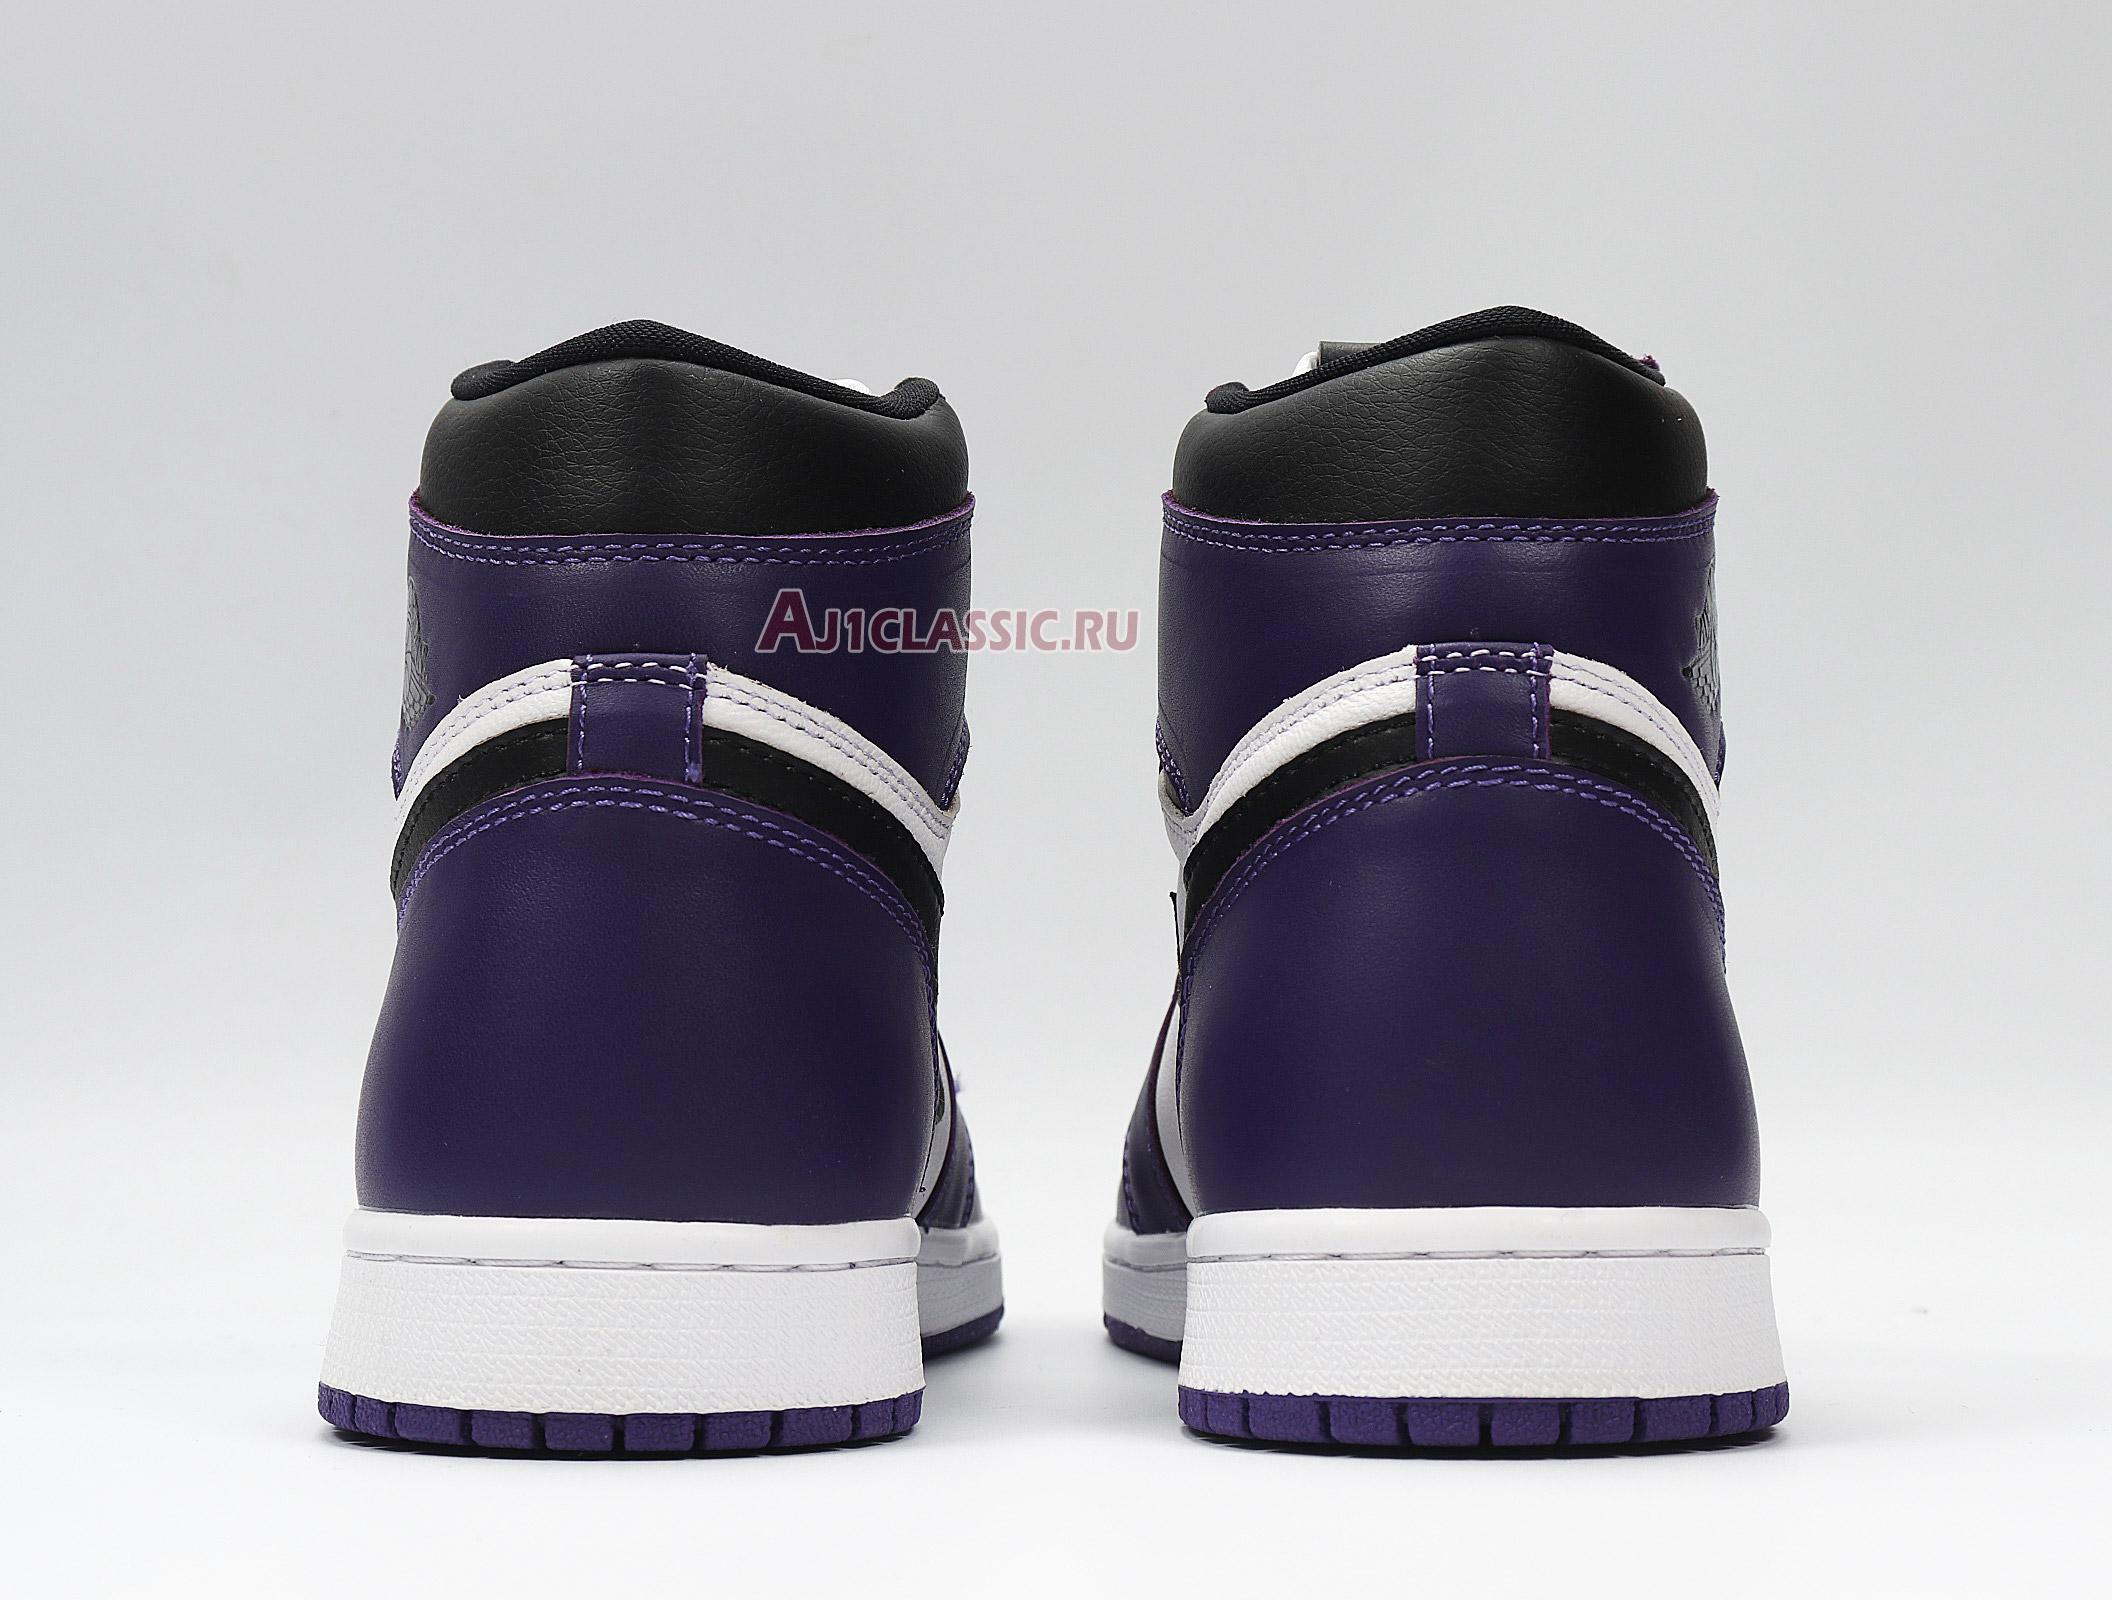 Air Jordan 1 Retro High OG "Court Purple 2.0" 555088-500